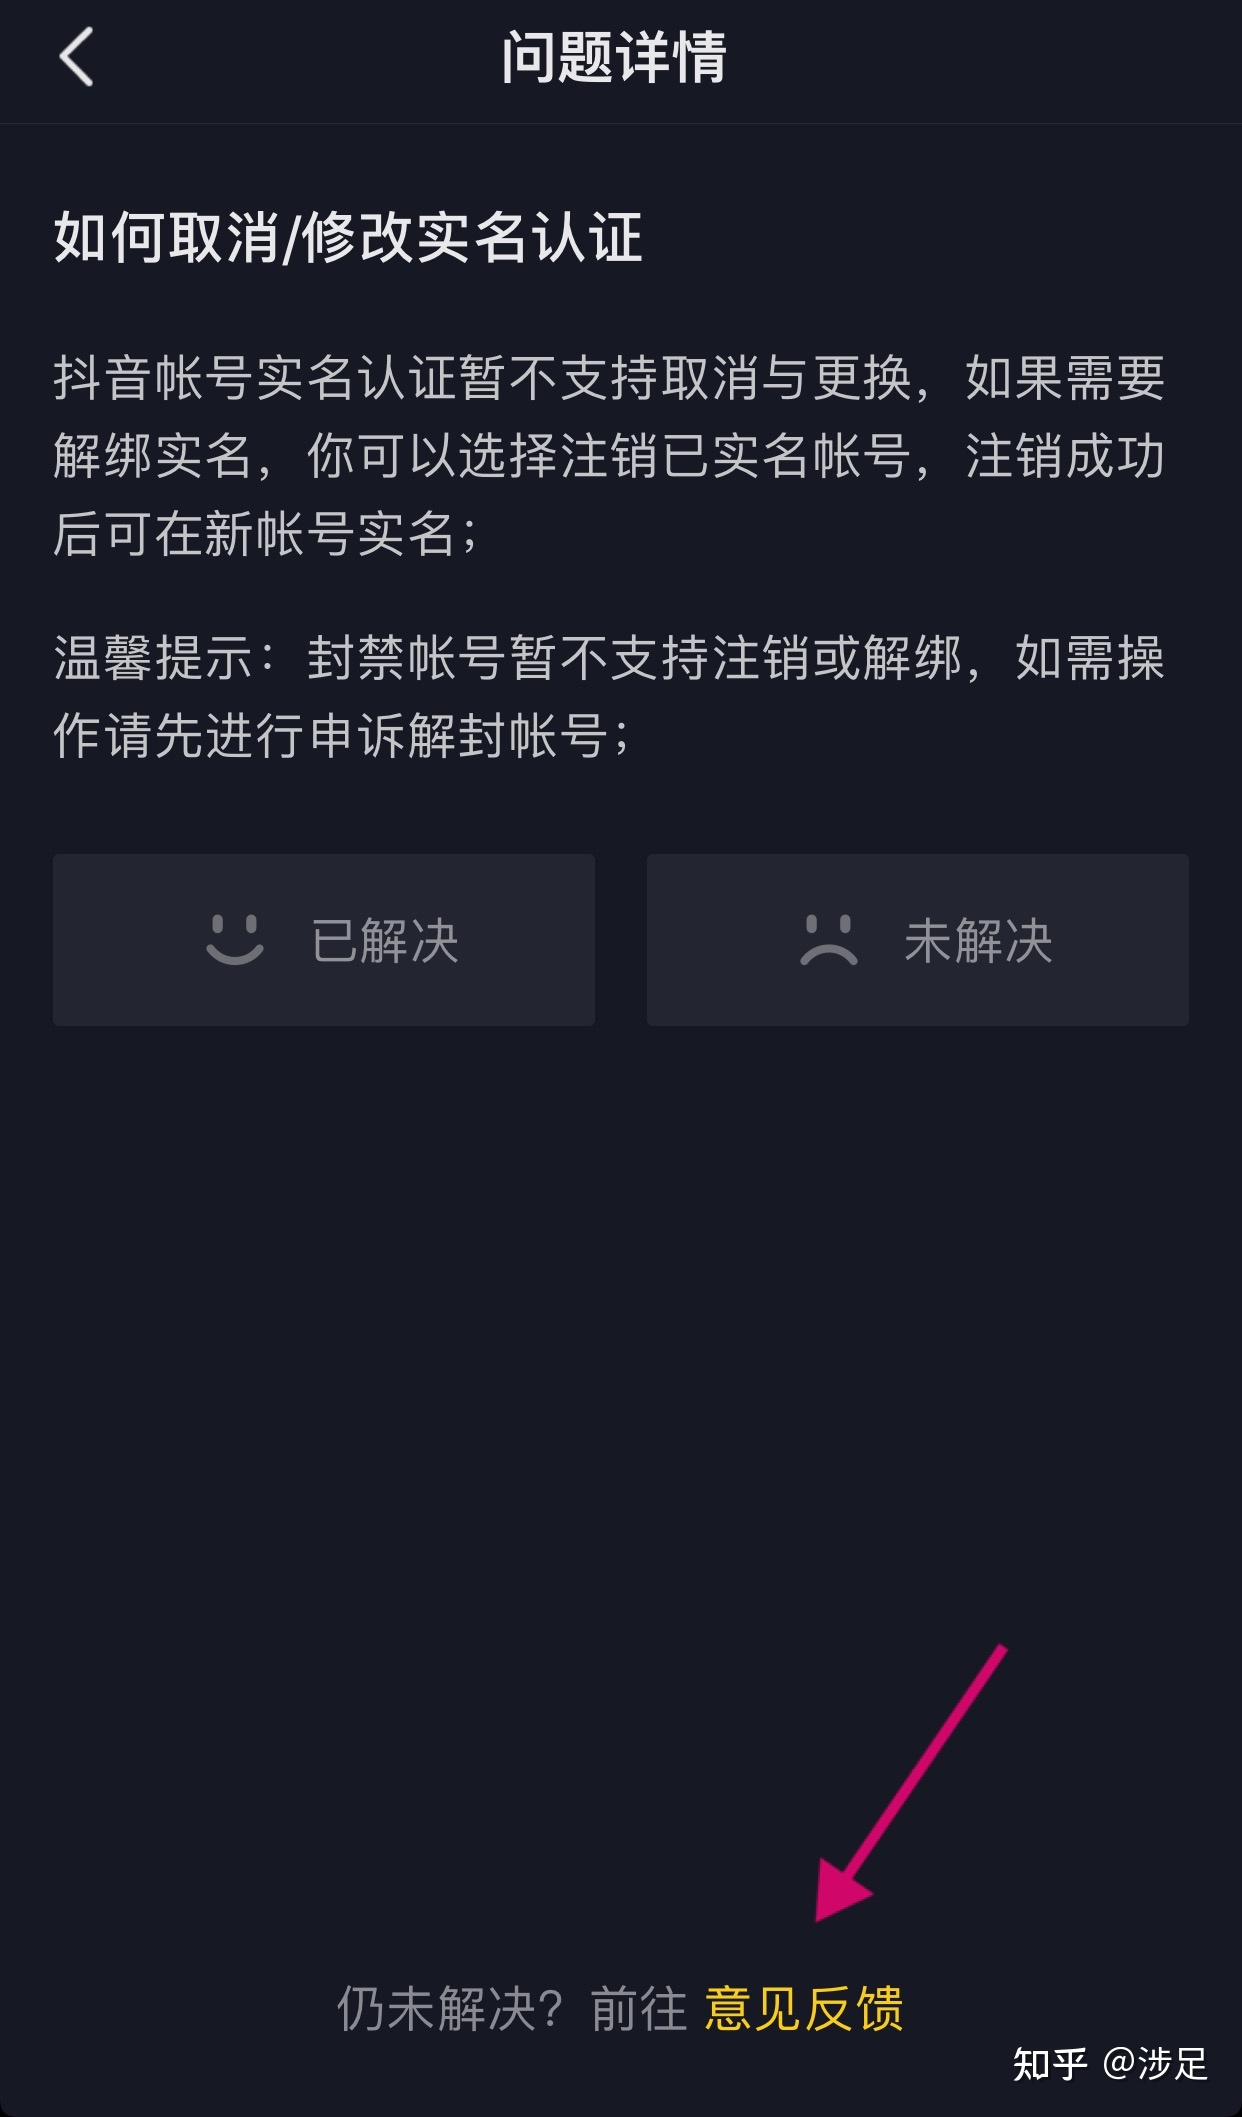 sitewww.cehuan.com 抖音账号代运营运营活_sitewww.cehuan.com 抖音账号代运营多少钱_抖音自媒体账号运营